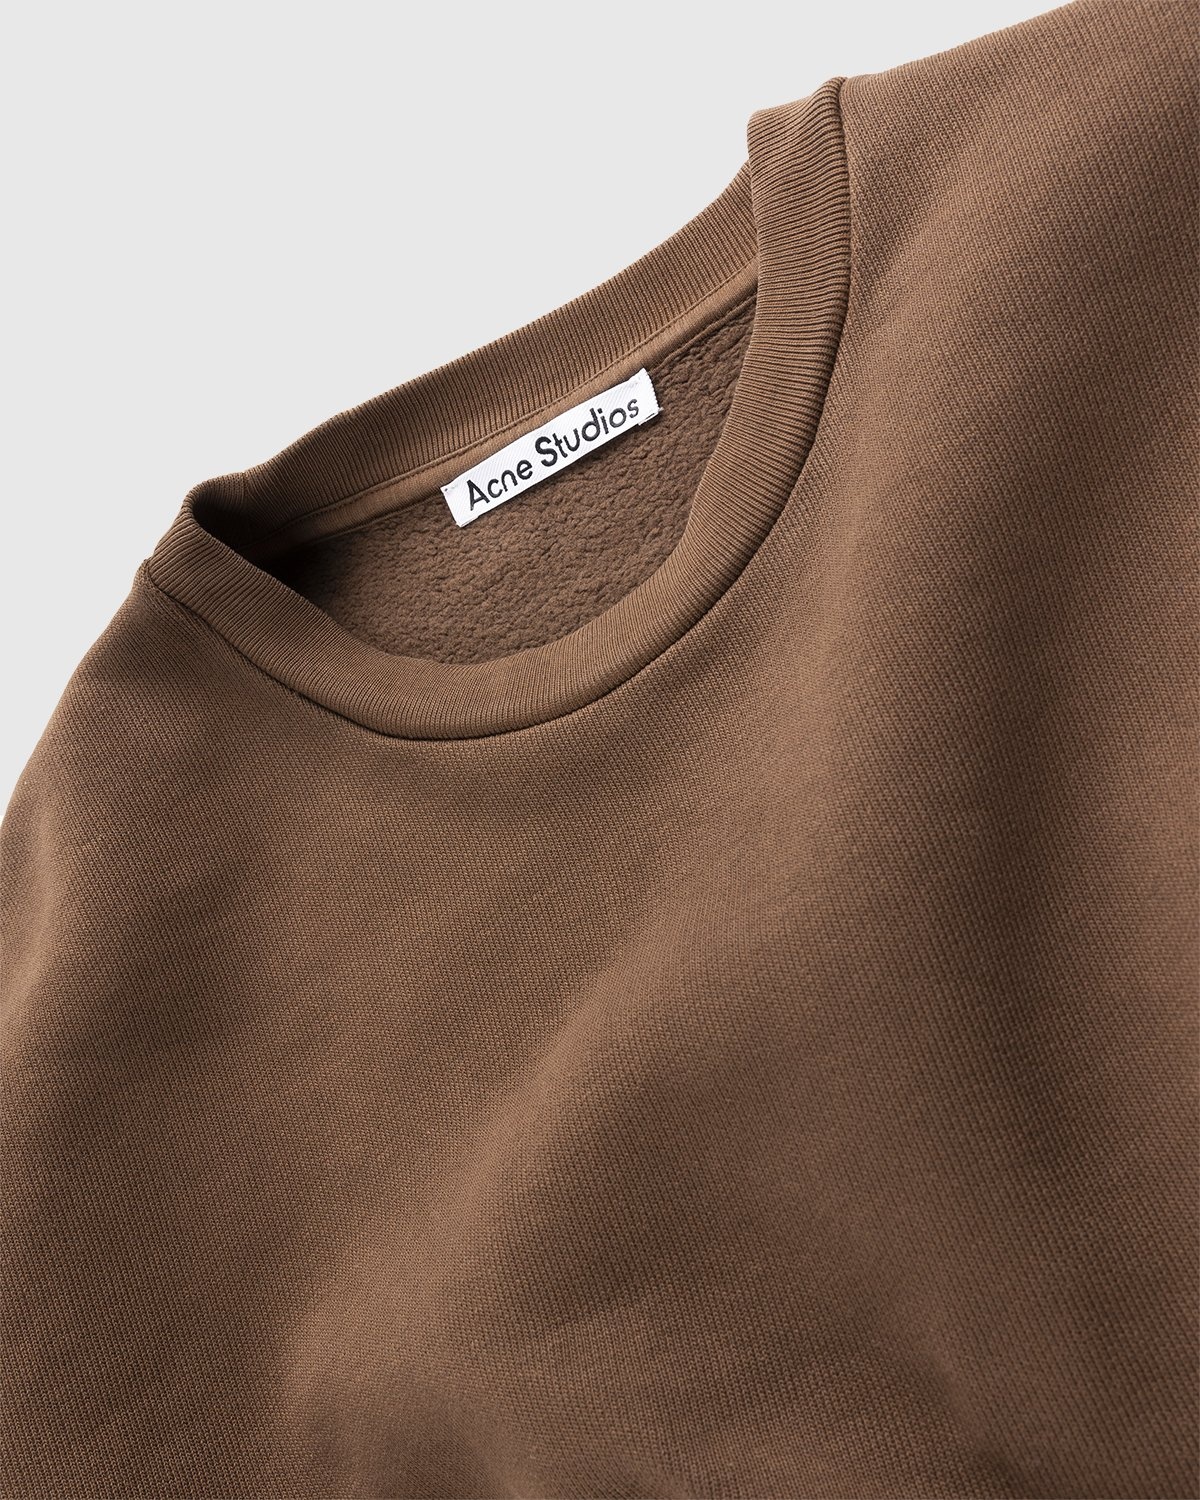 Acne Studios – Logo Sweatshirt Chocolate Brown - Sweatshirts - Brown - Image 3